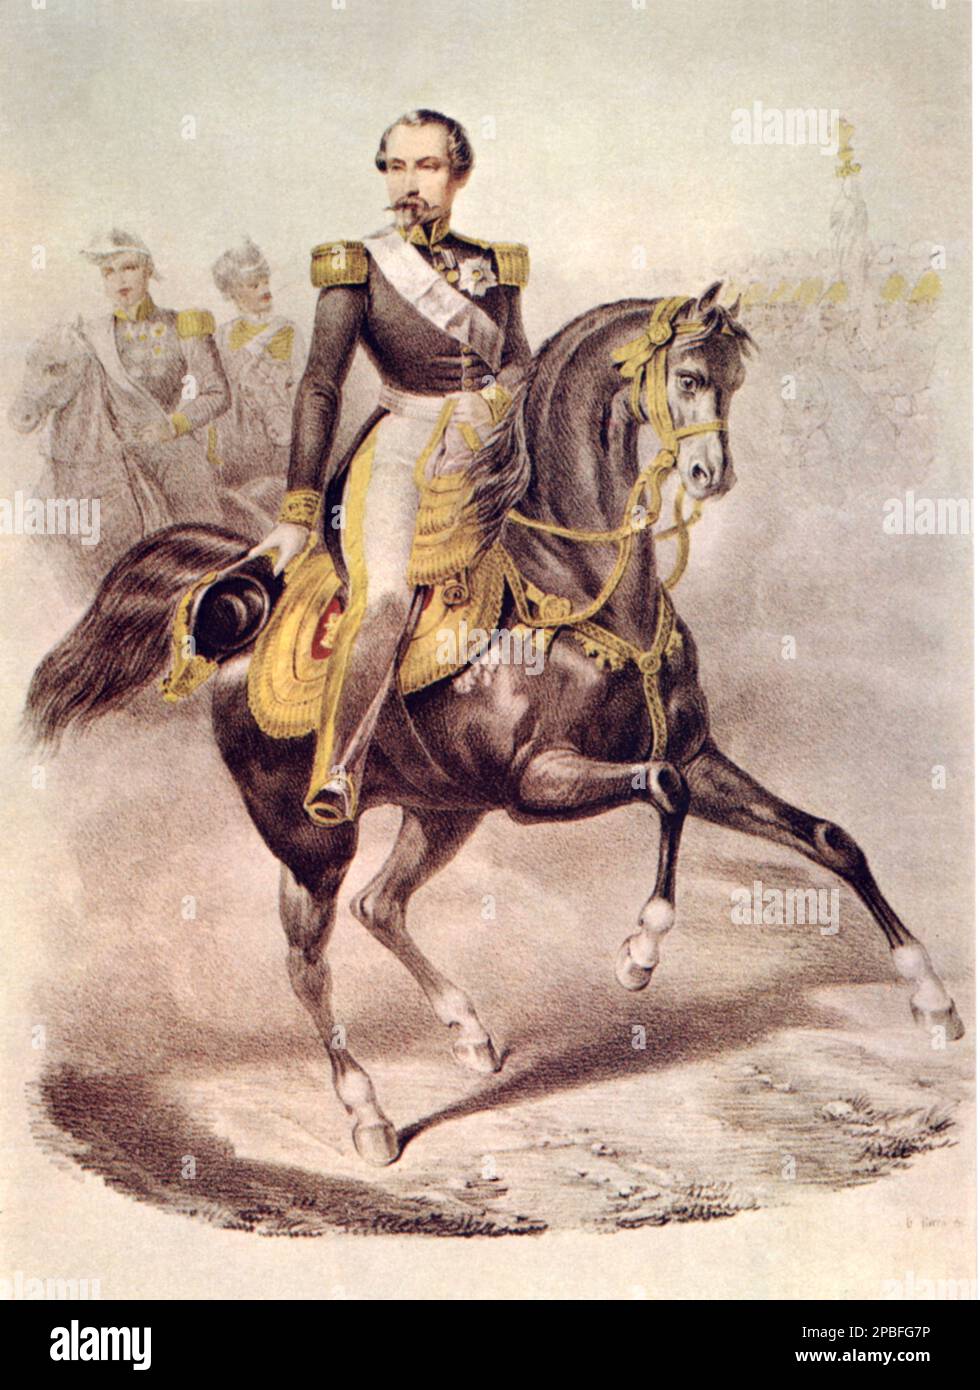 1859 ca. : The french Emperor NAPOLEON III ( Paris 1808 - Chislehurst 1873 , son of Louis BONAPARTE and Ortensia Beauharnais ) . Popular print  - REALI - royalty - nobili -  Nobiltà  - Napoleone III - imperatore - baffi - moustache - ritratto - baffi - moustache - beard - barba - RISORGIMENTO - CAVALLO - HORSE - military uniform - divisa uniforme militare  ----  Archivio GBB Stock Photo